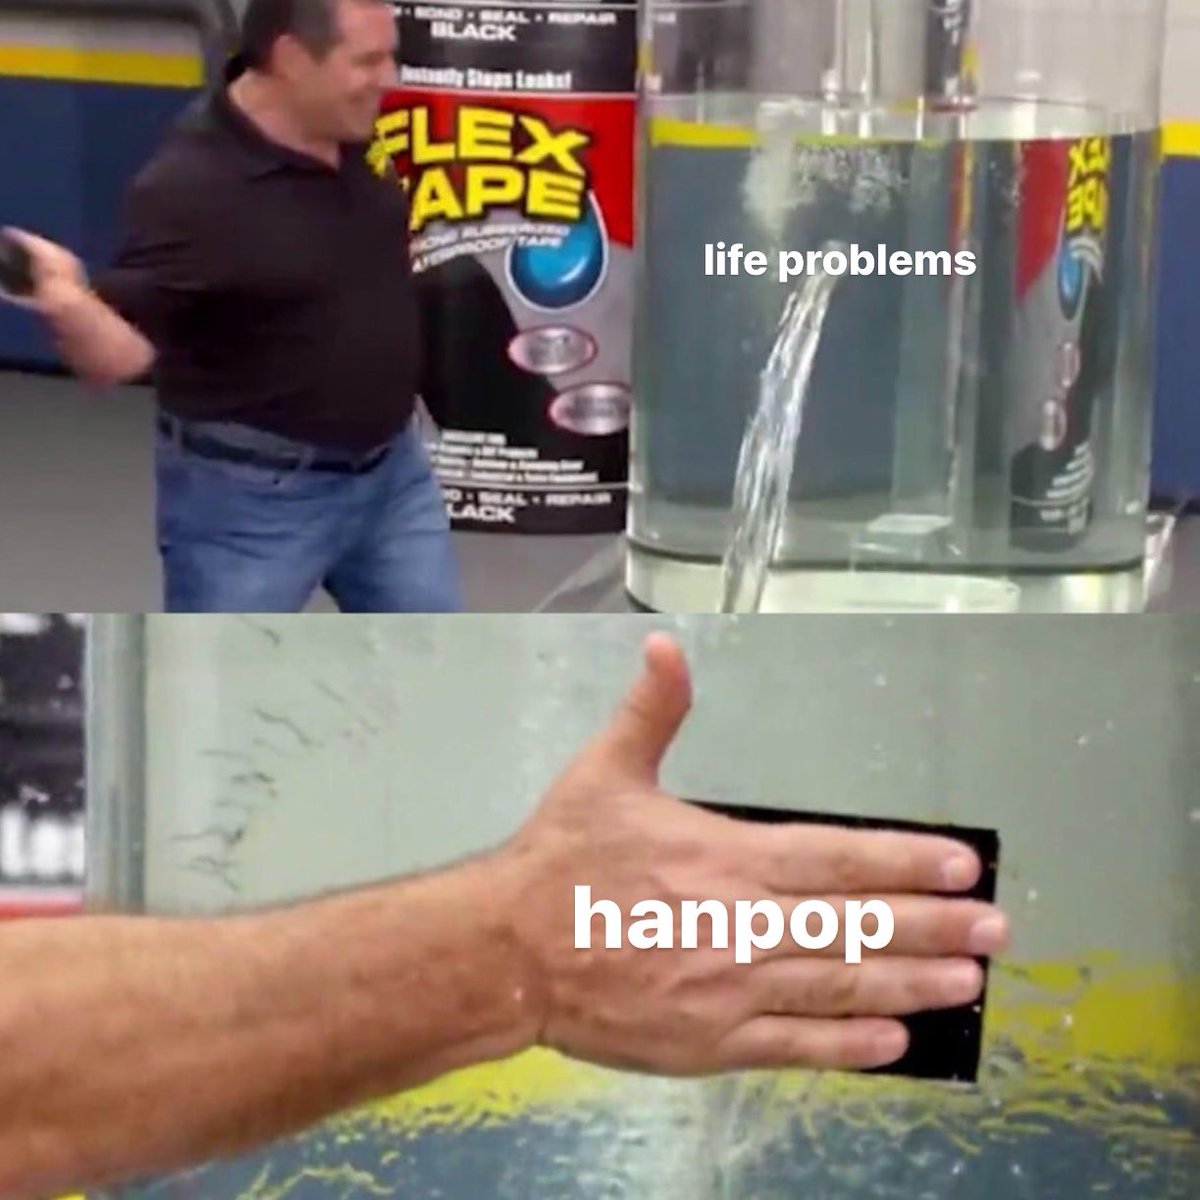 hanpop saves me again